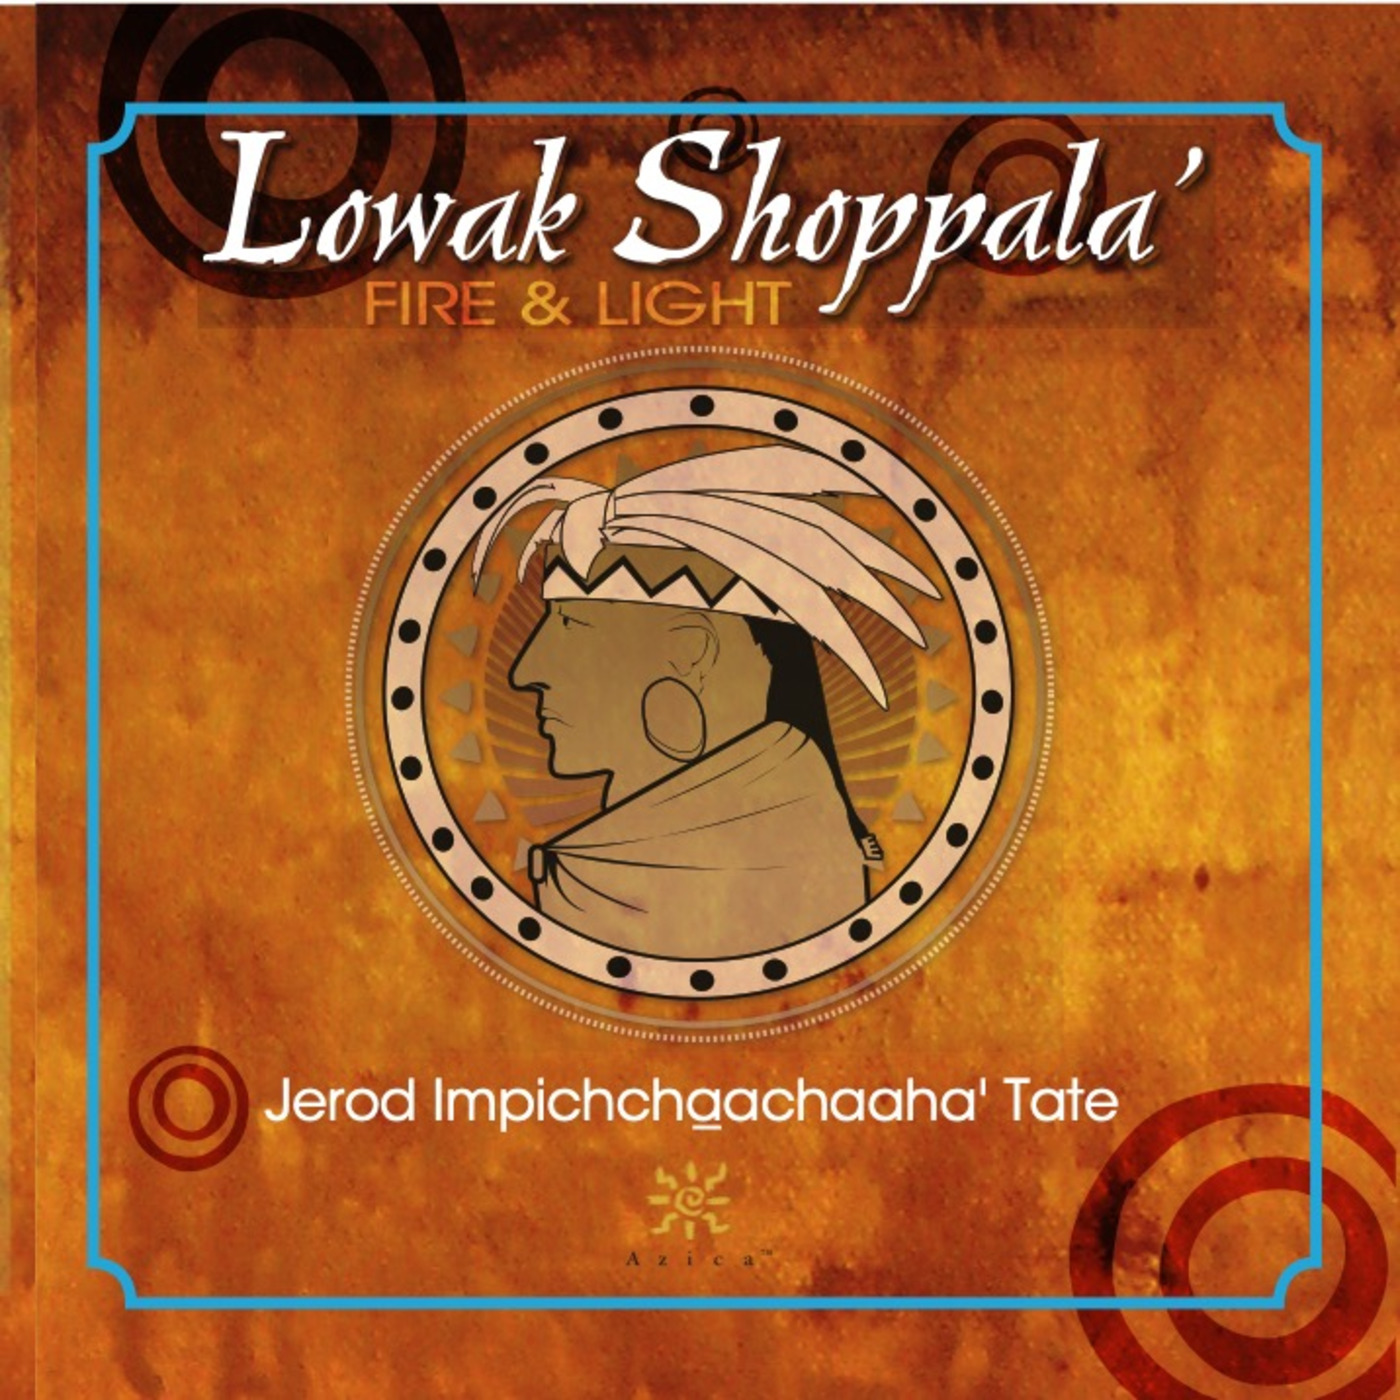 Episode 112: 17112 Lowak Shoppala'